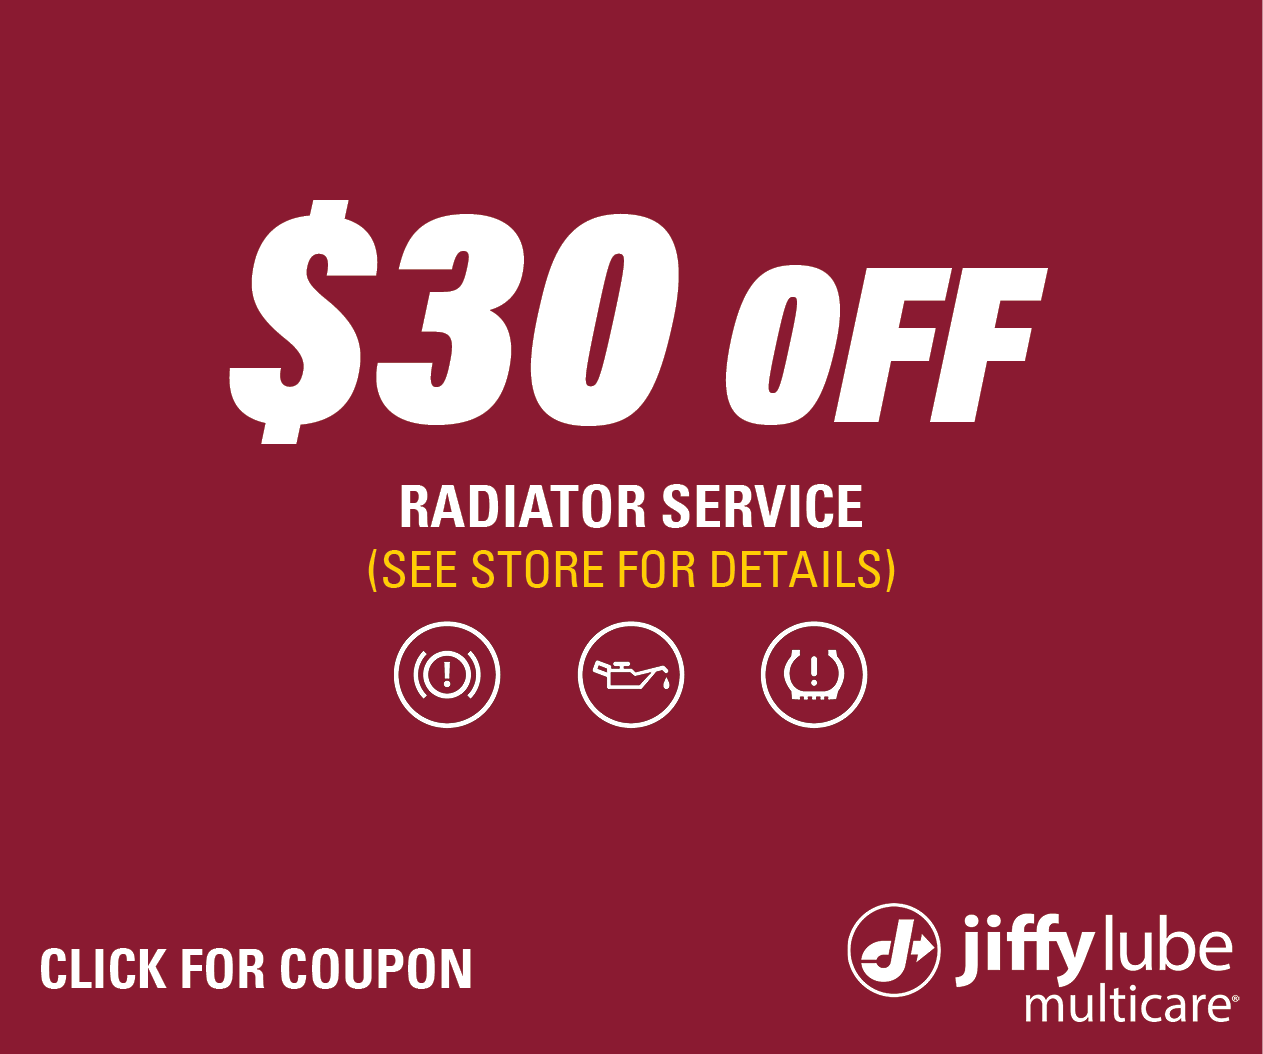 $30 OFF Radiator Service Website Image (Bronco Lube)